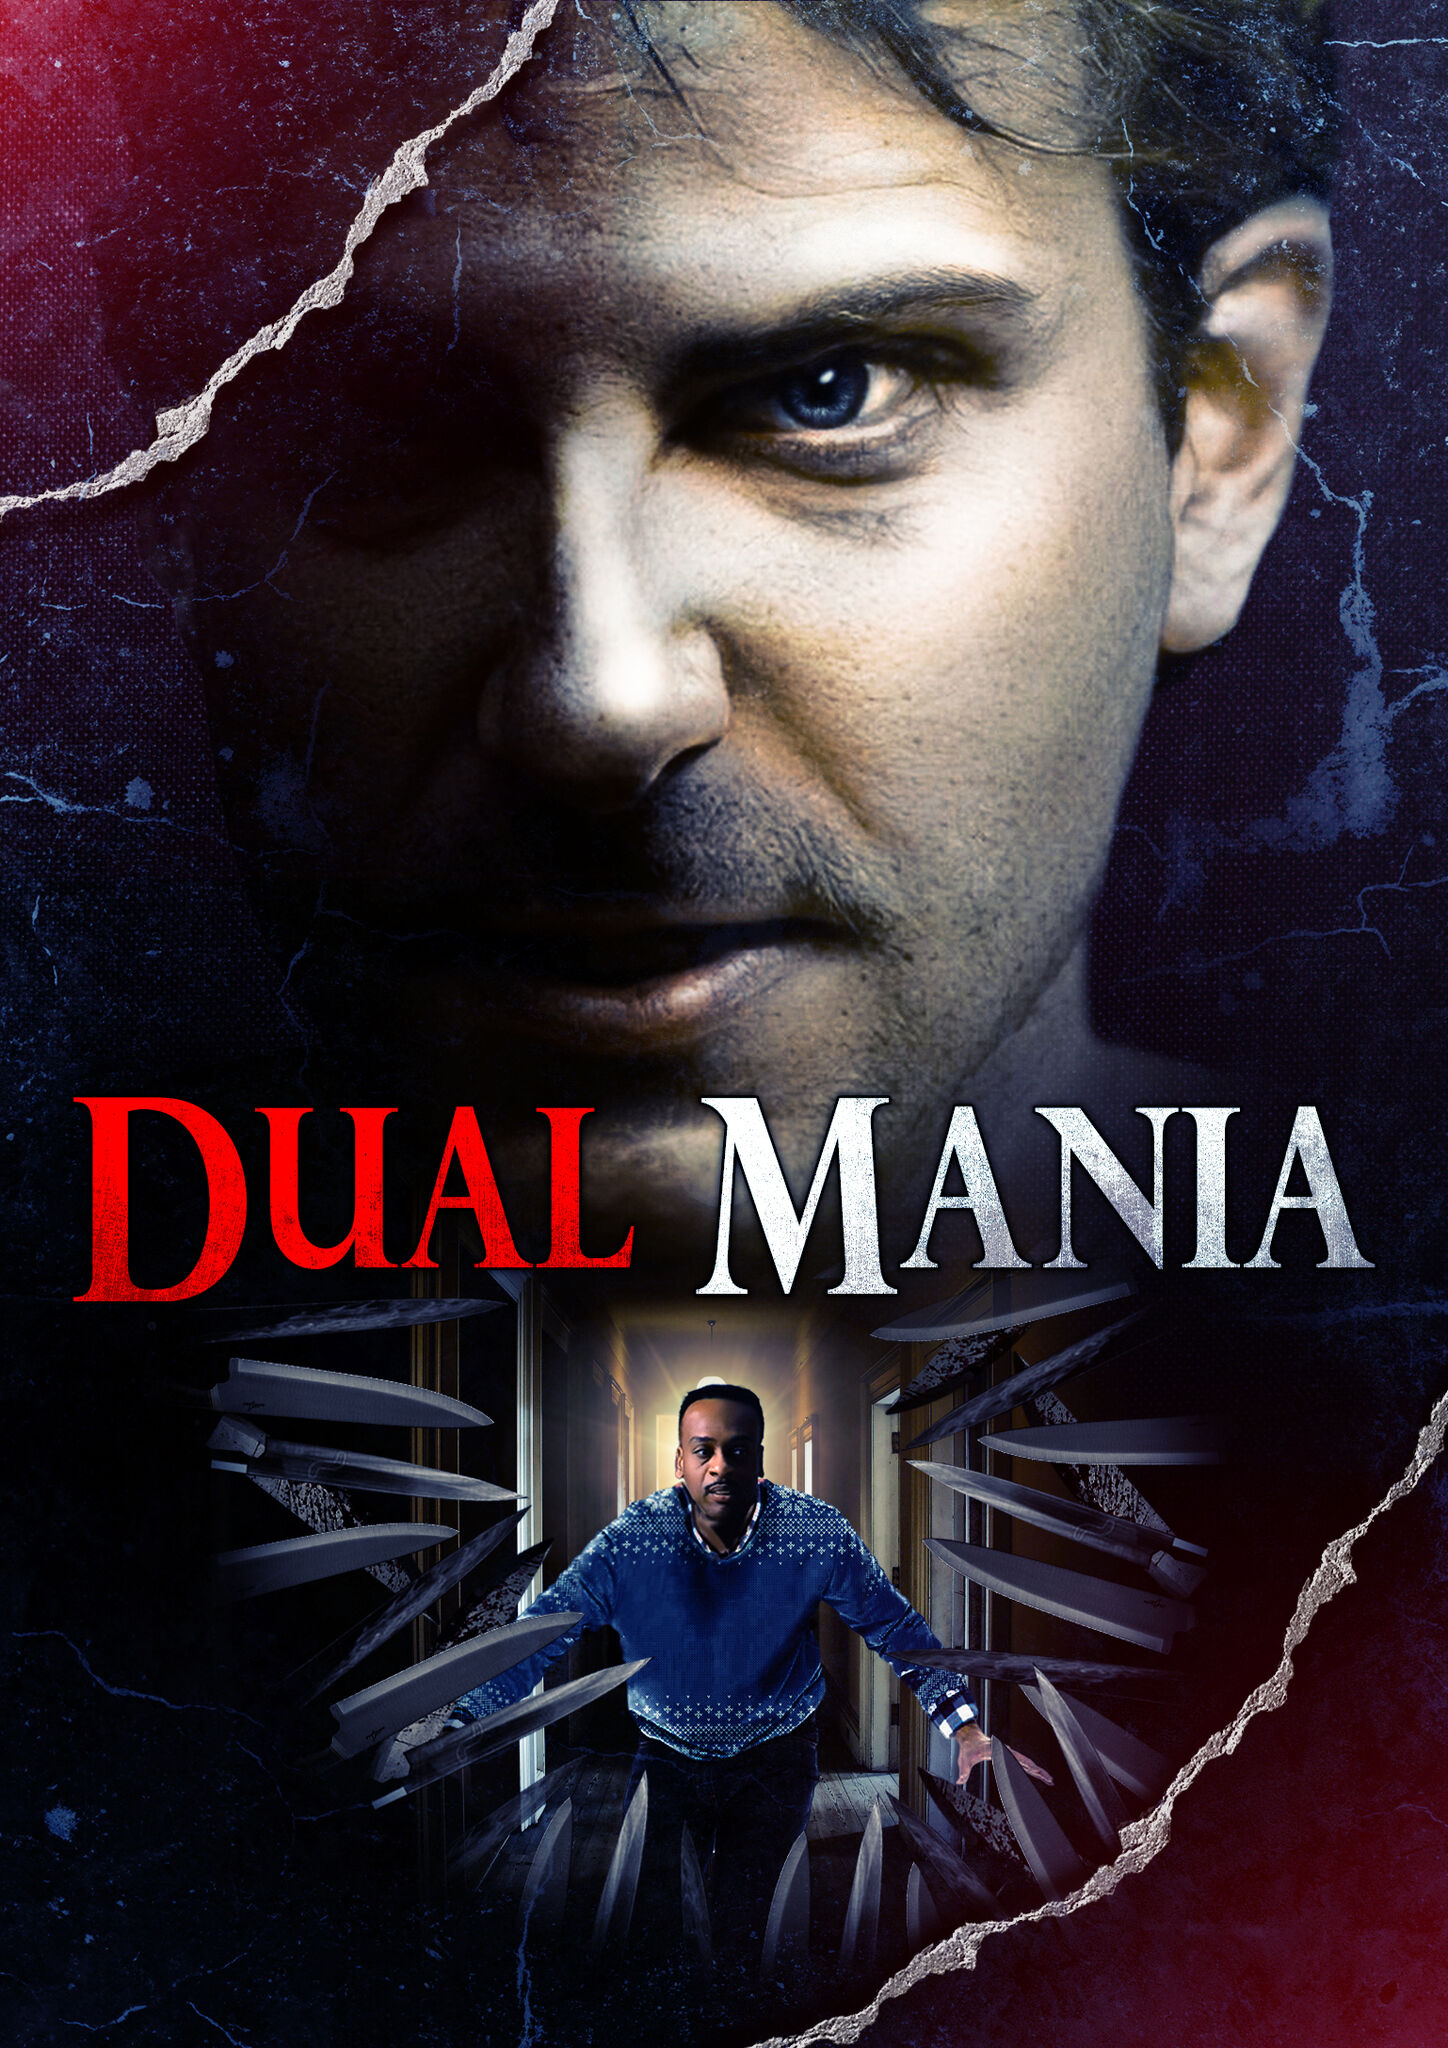 DUAL MANIA (2018)